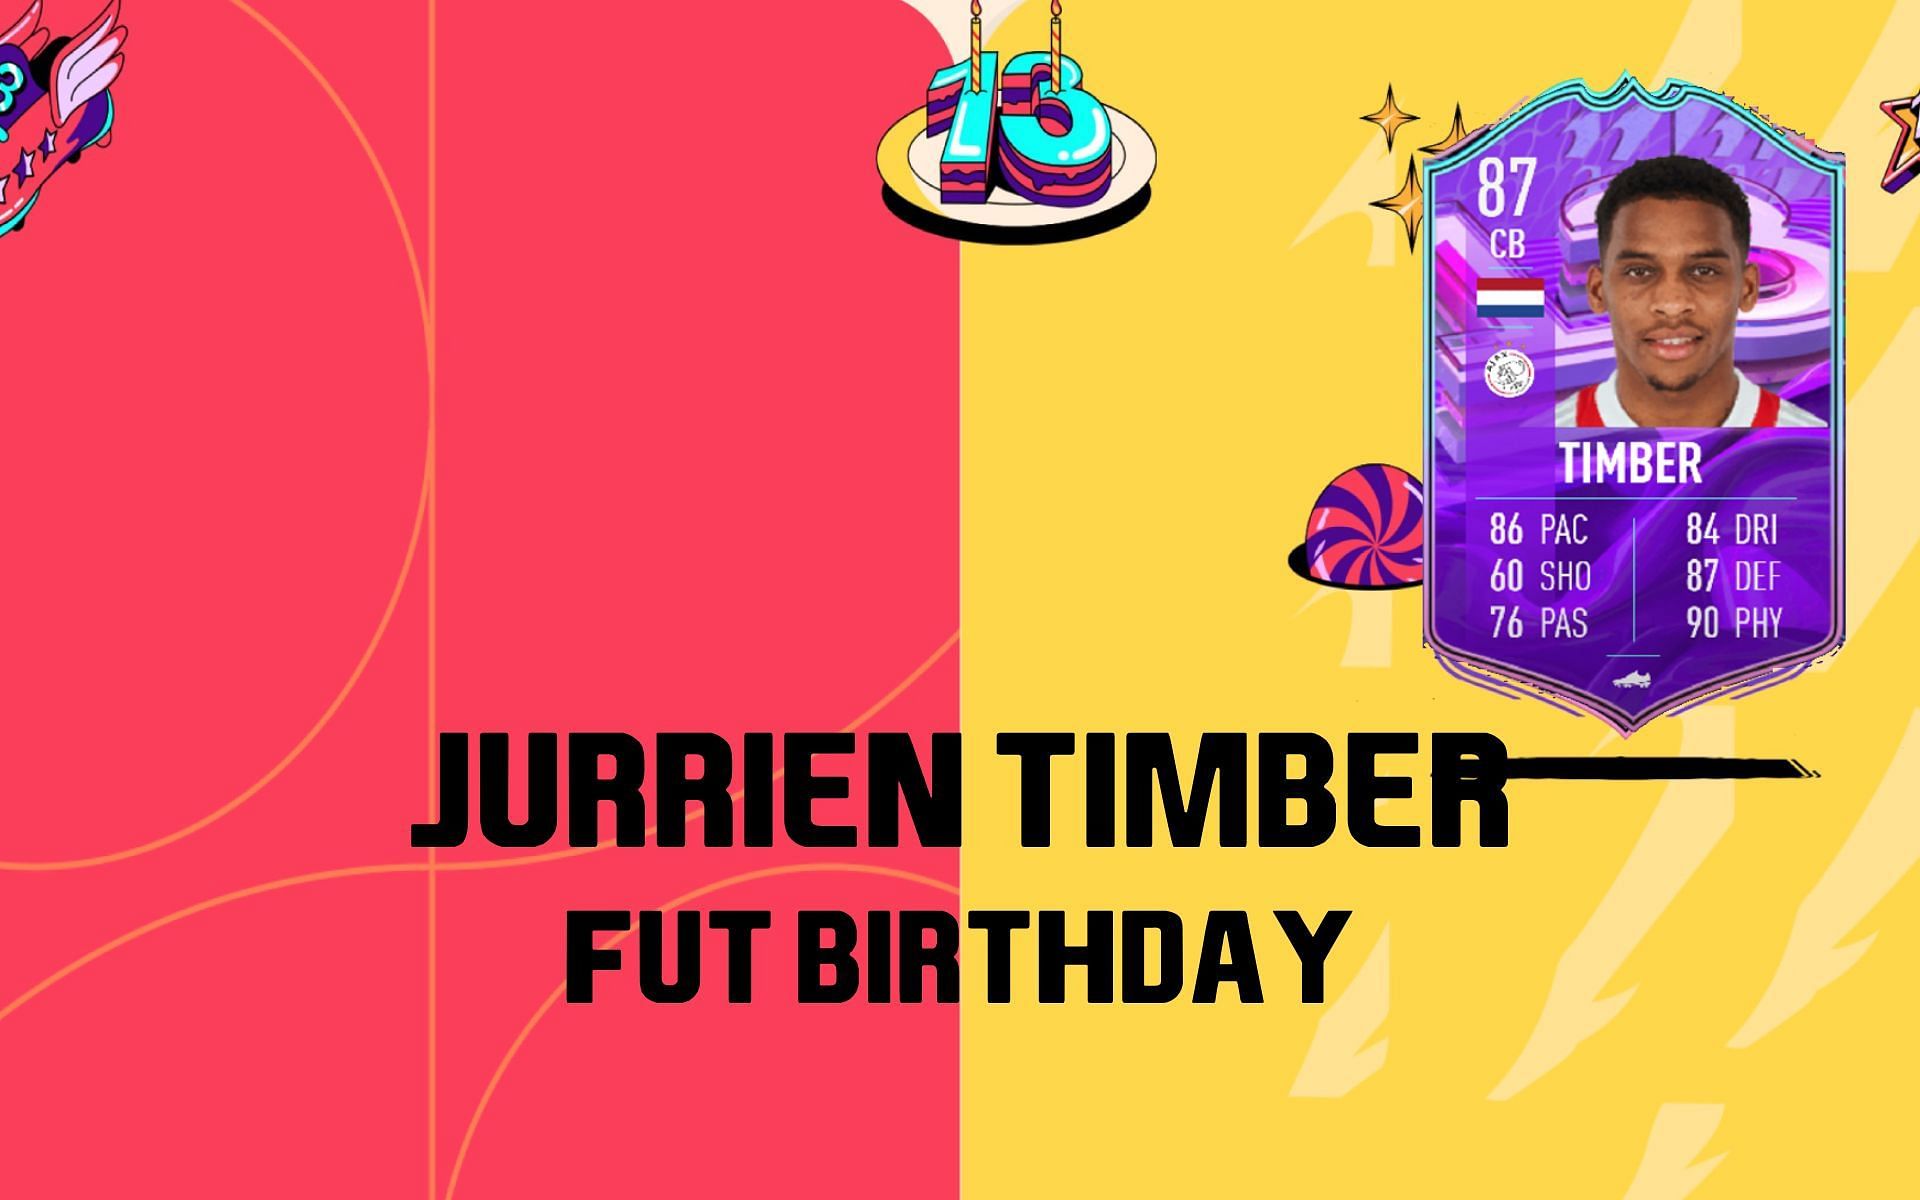 Jurri&euml;n Timber FUT Birthday card in FIFA 22 (Image via Sportskeeda)